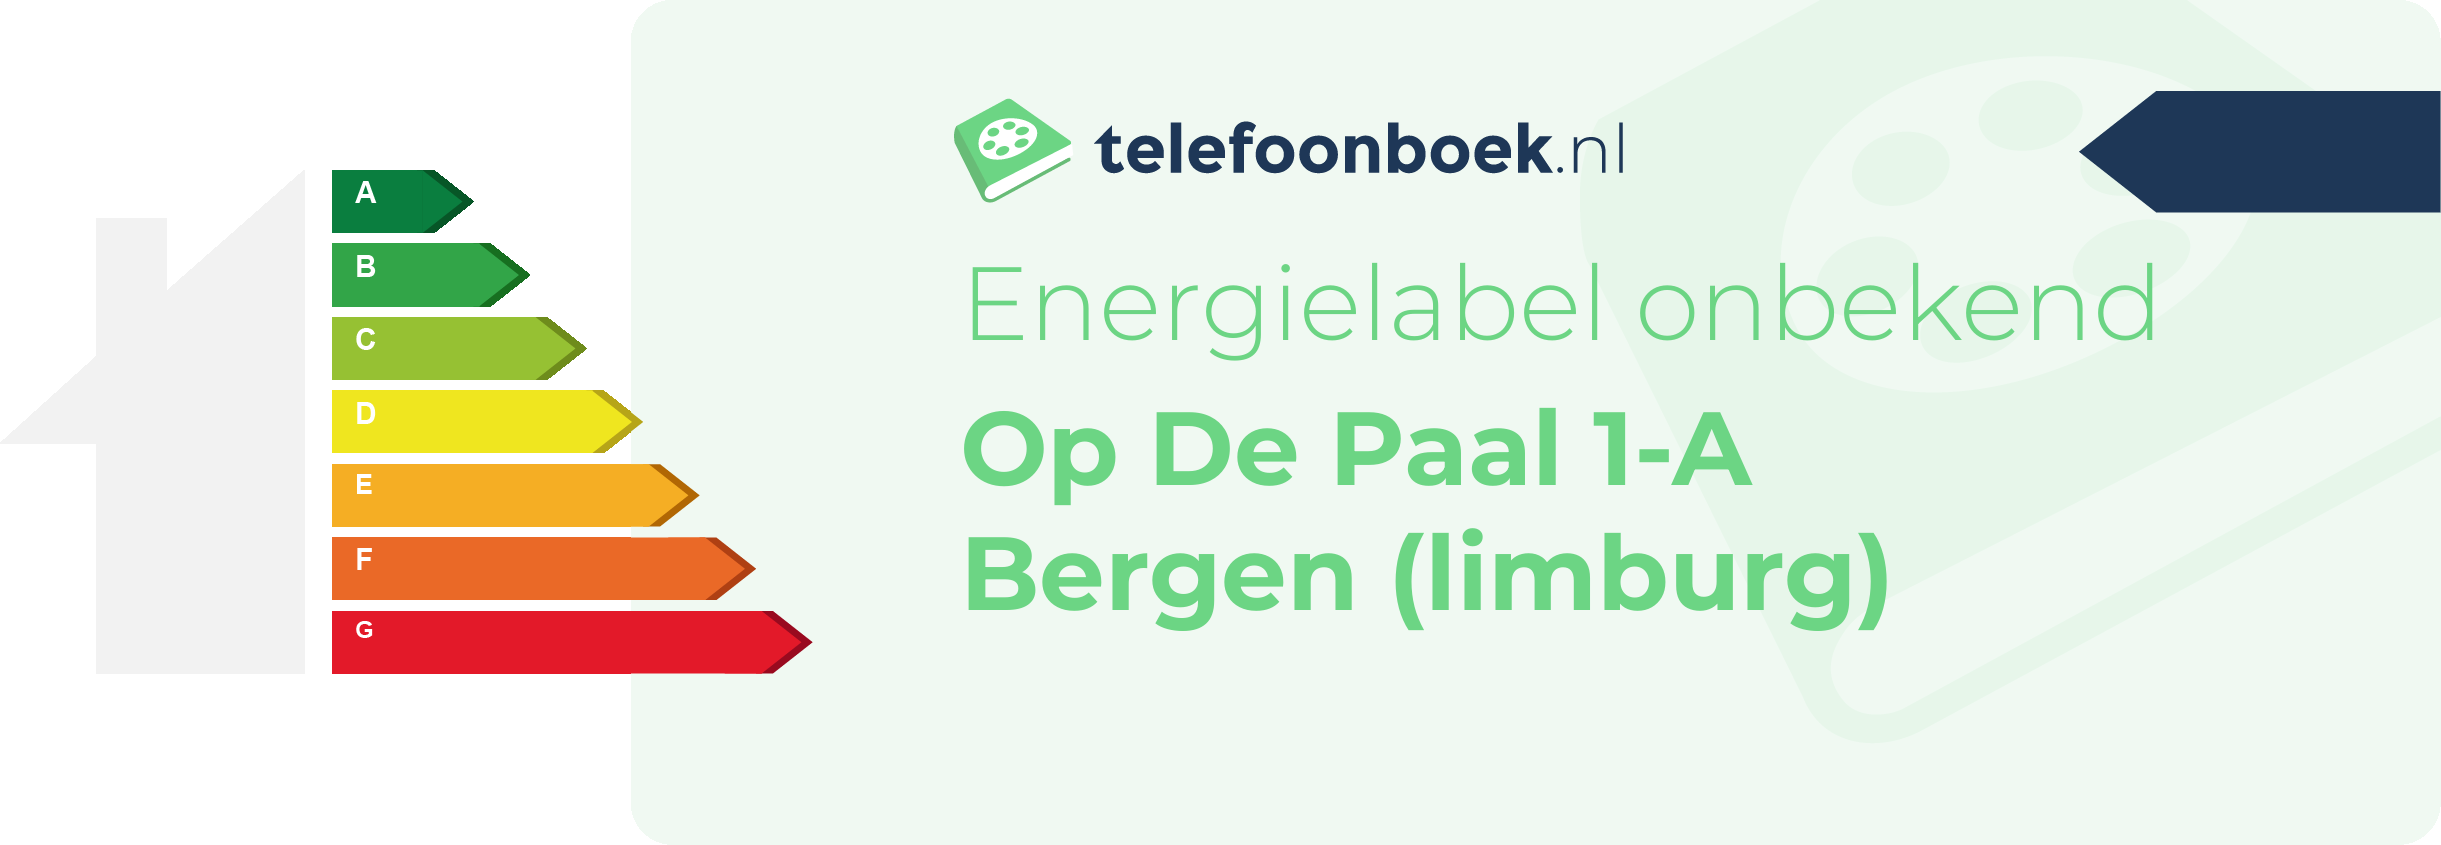 Energielabel Op De Paal 1-A Bergen (Limburg)